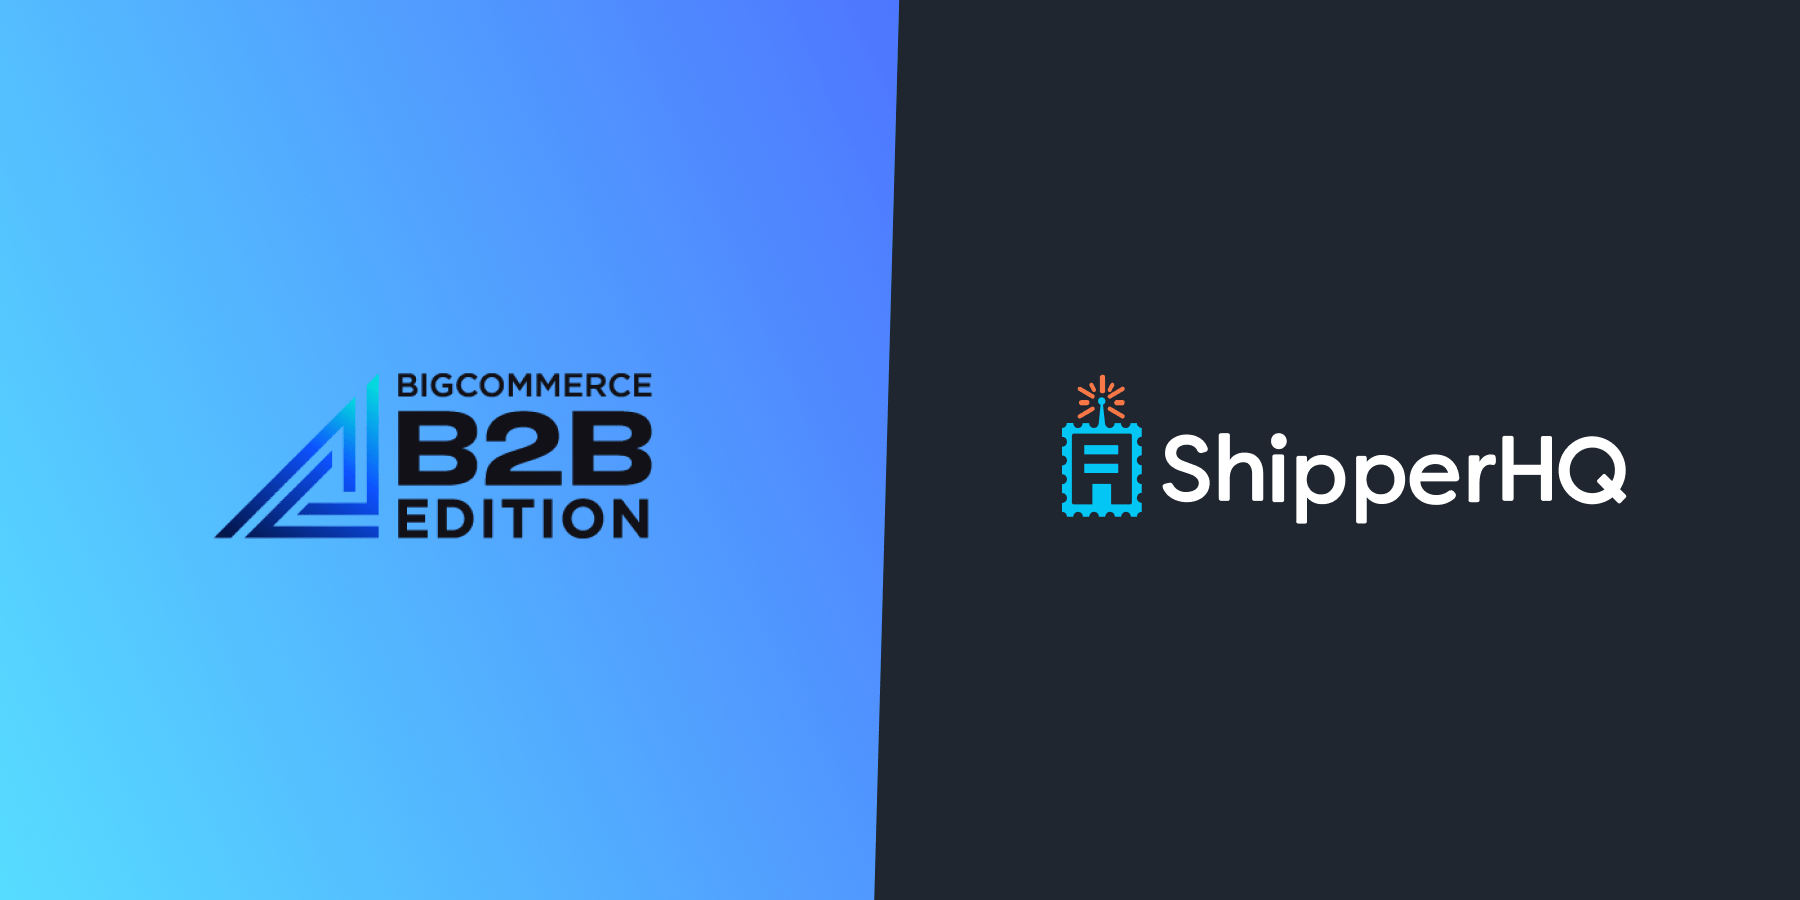 SHipperHQ and BigCommerce B2B logos